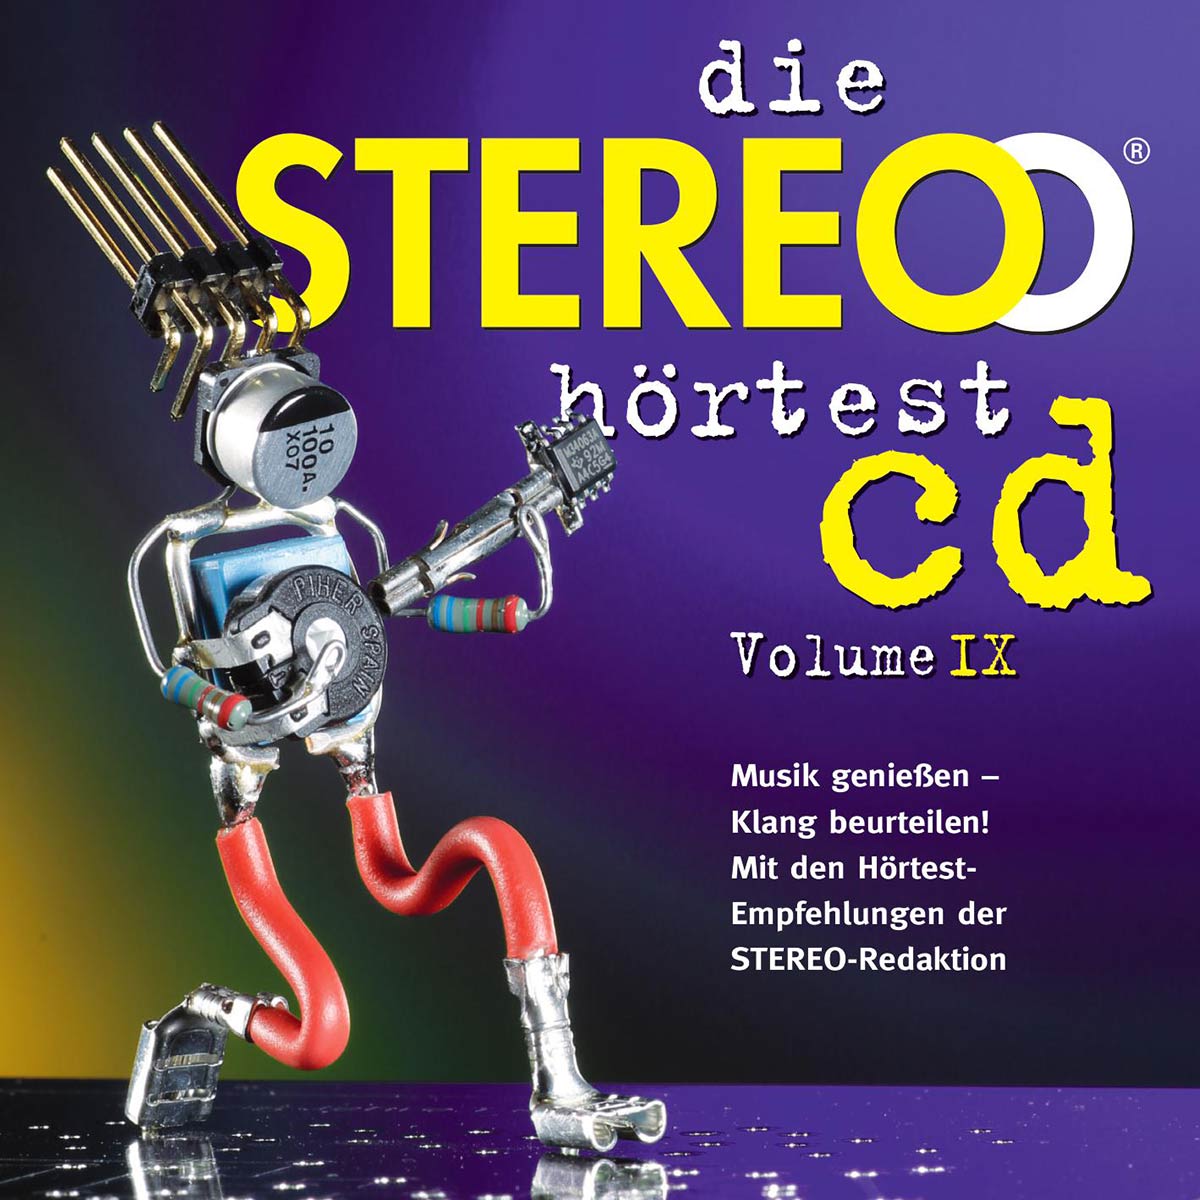 Die Stereo Hörtest CD, Vol. IX